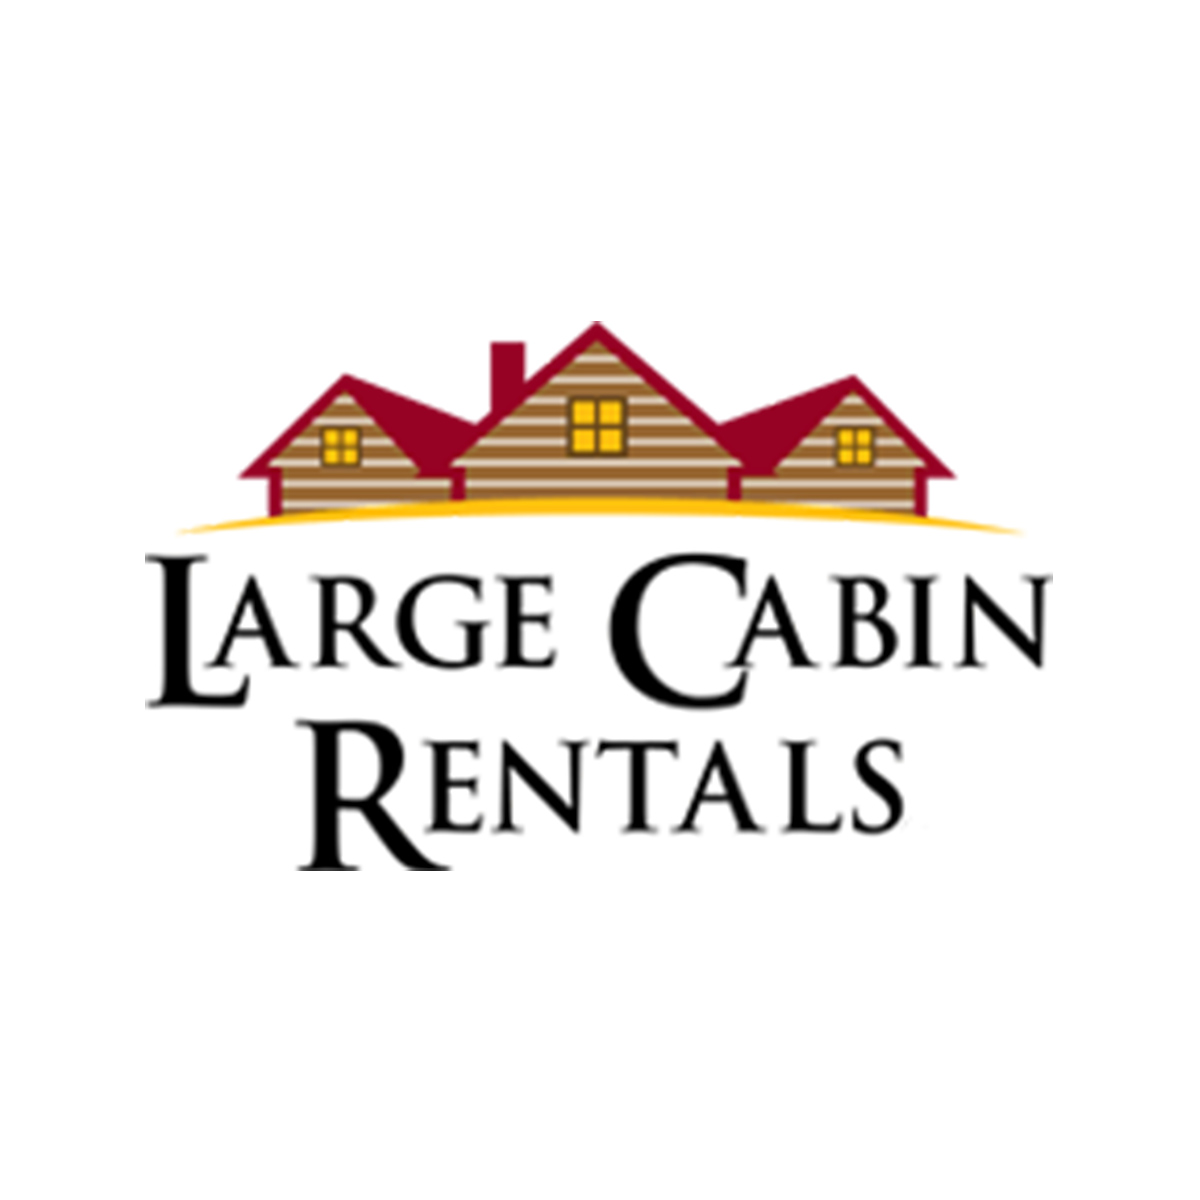 Large Cabin Rentals 2019 SMCB Logo.jpg